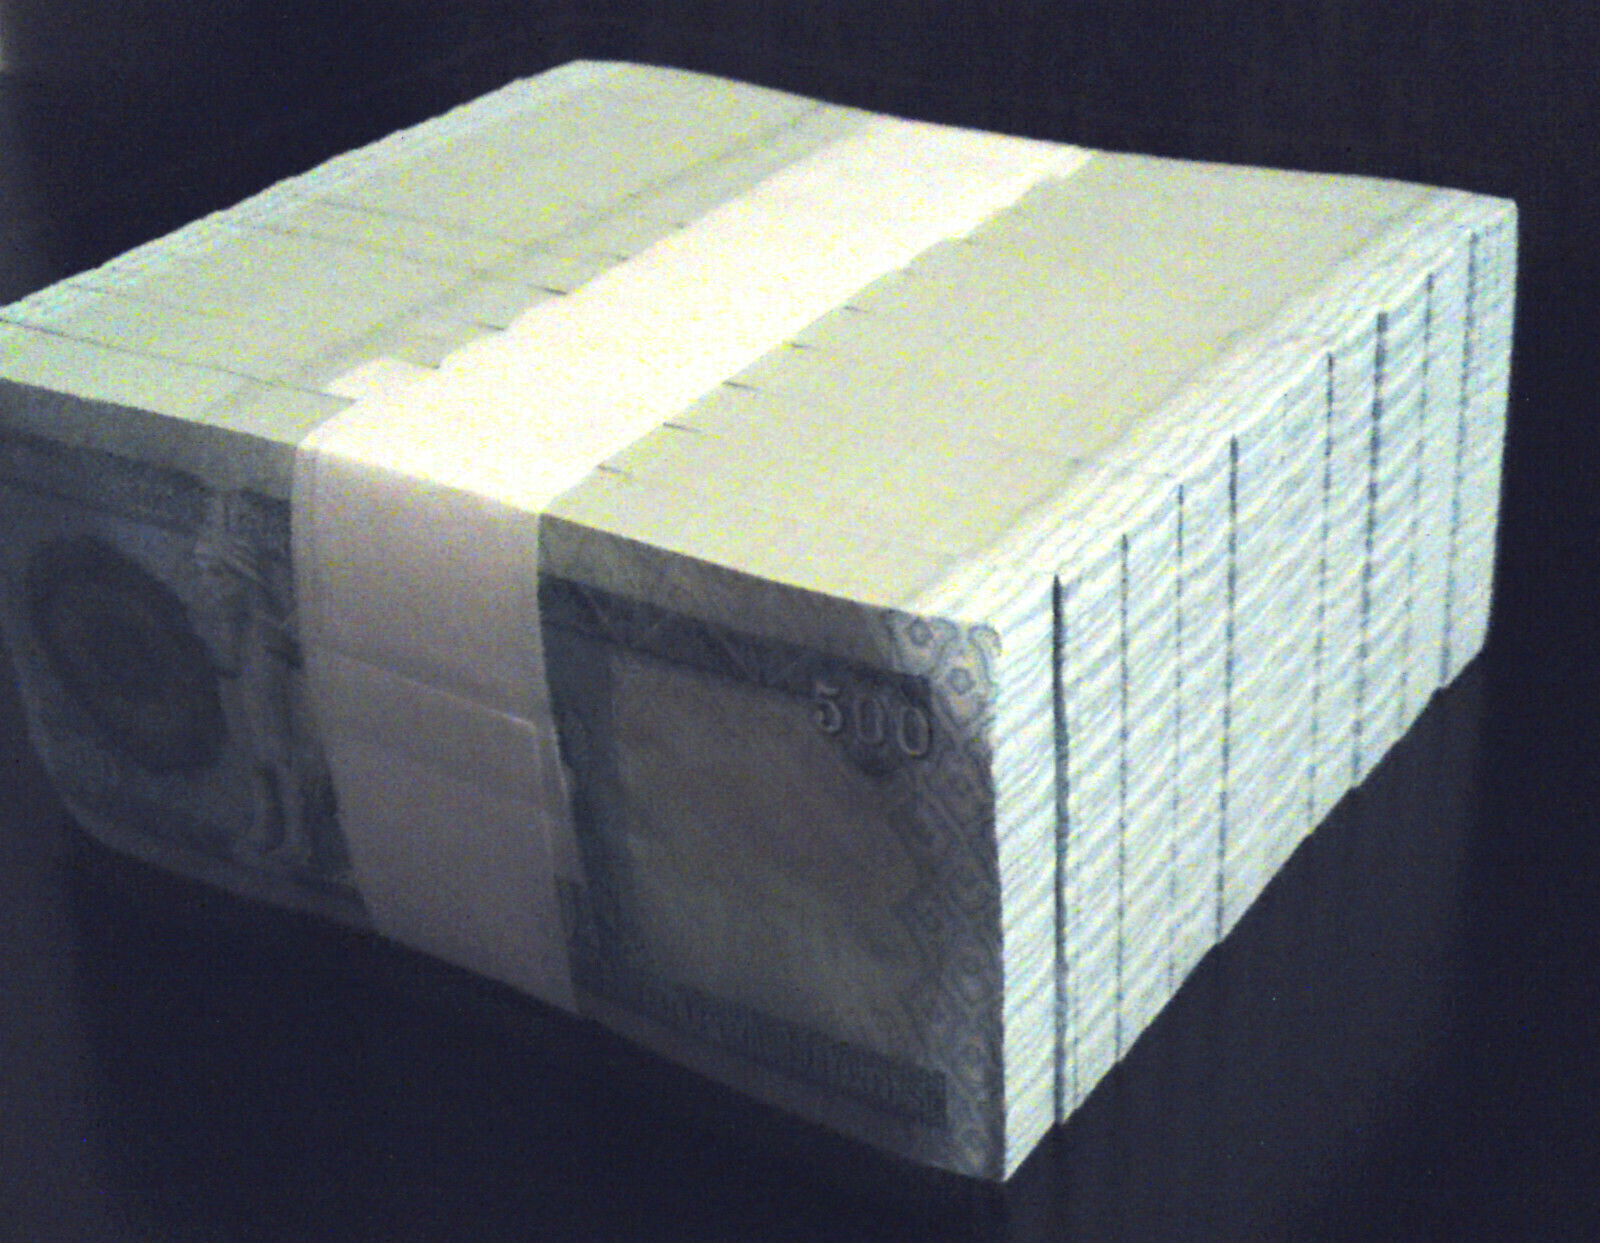 Iraqi Dinar 10, 000 Lot Of 20 - 500 Dinar Notes Uncirculated - Wholesale Iraq